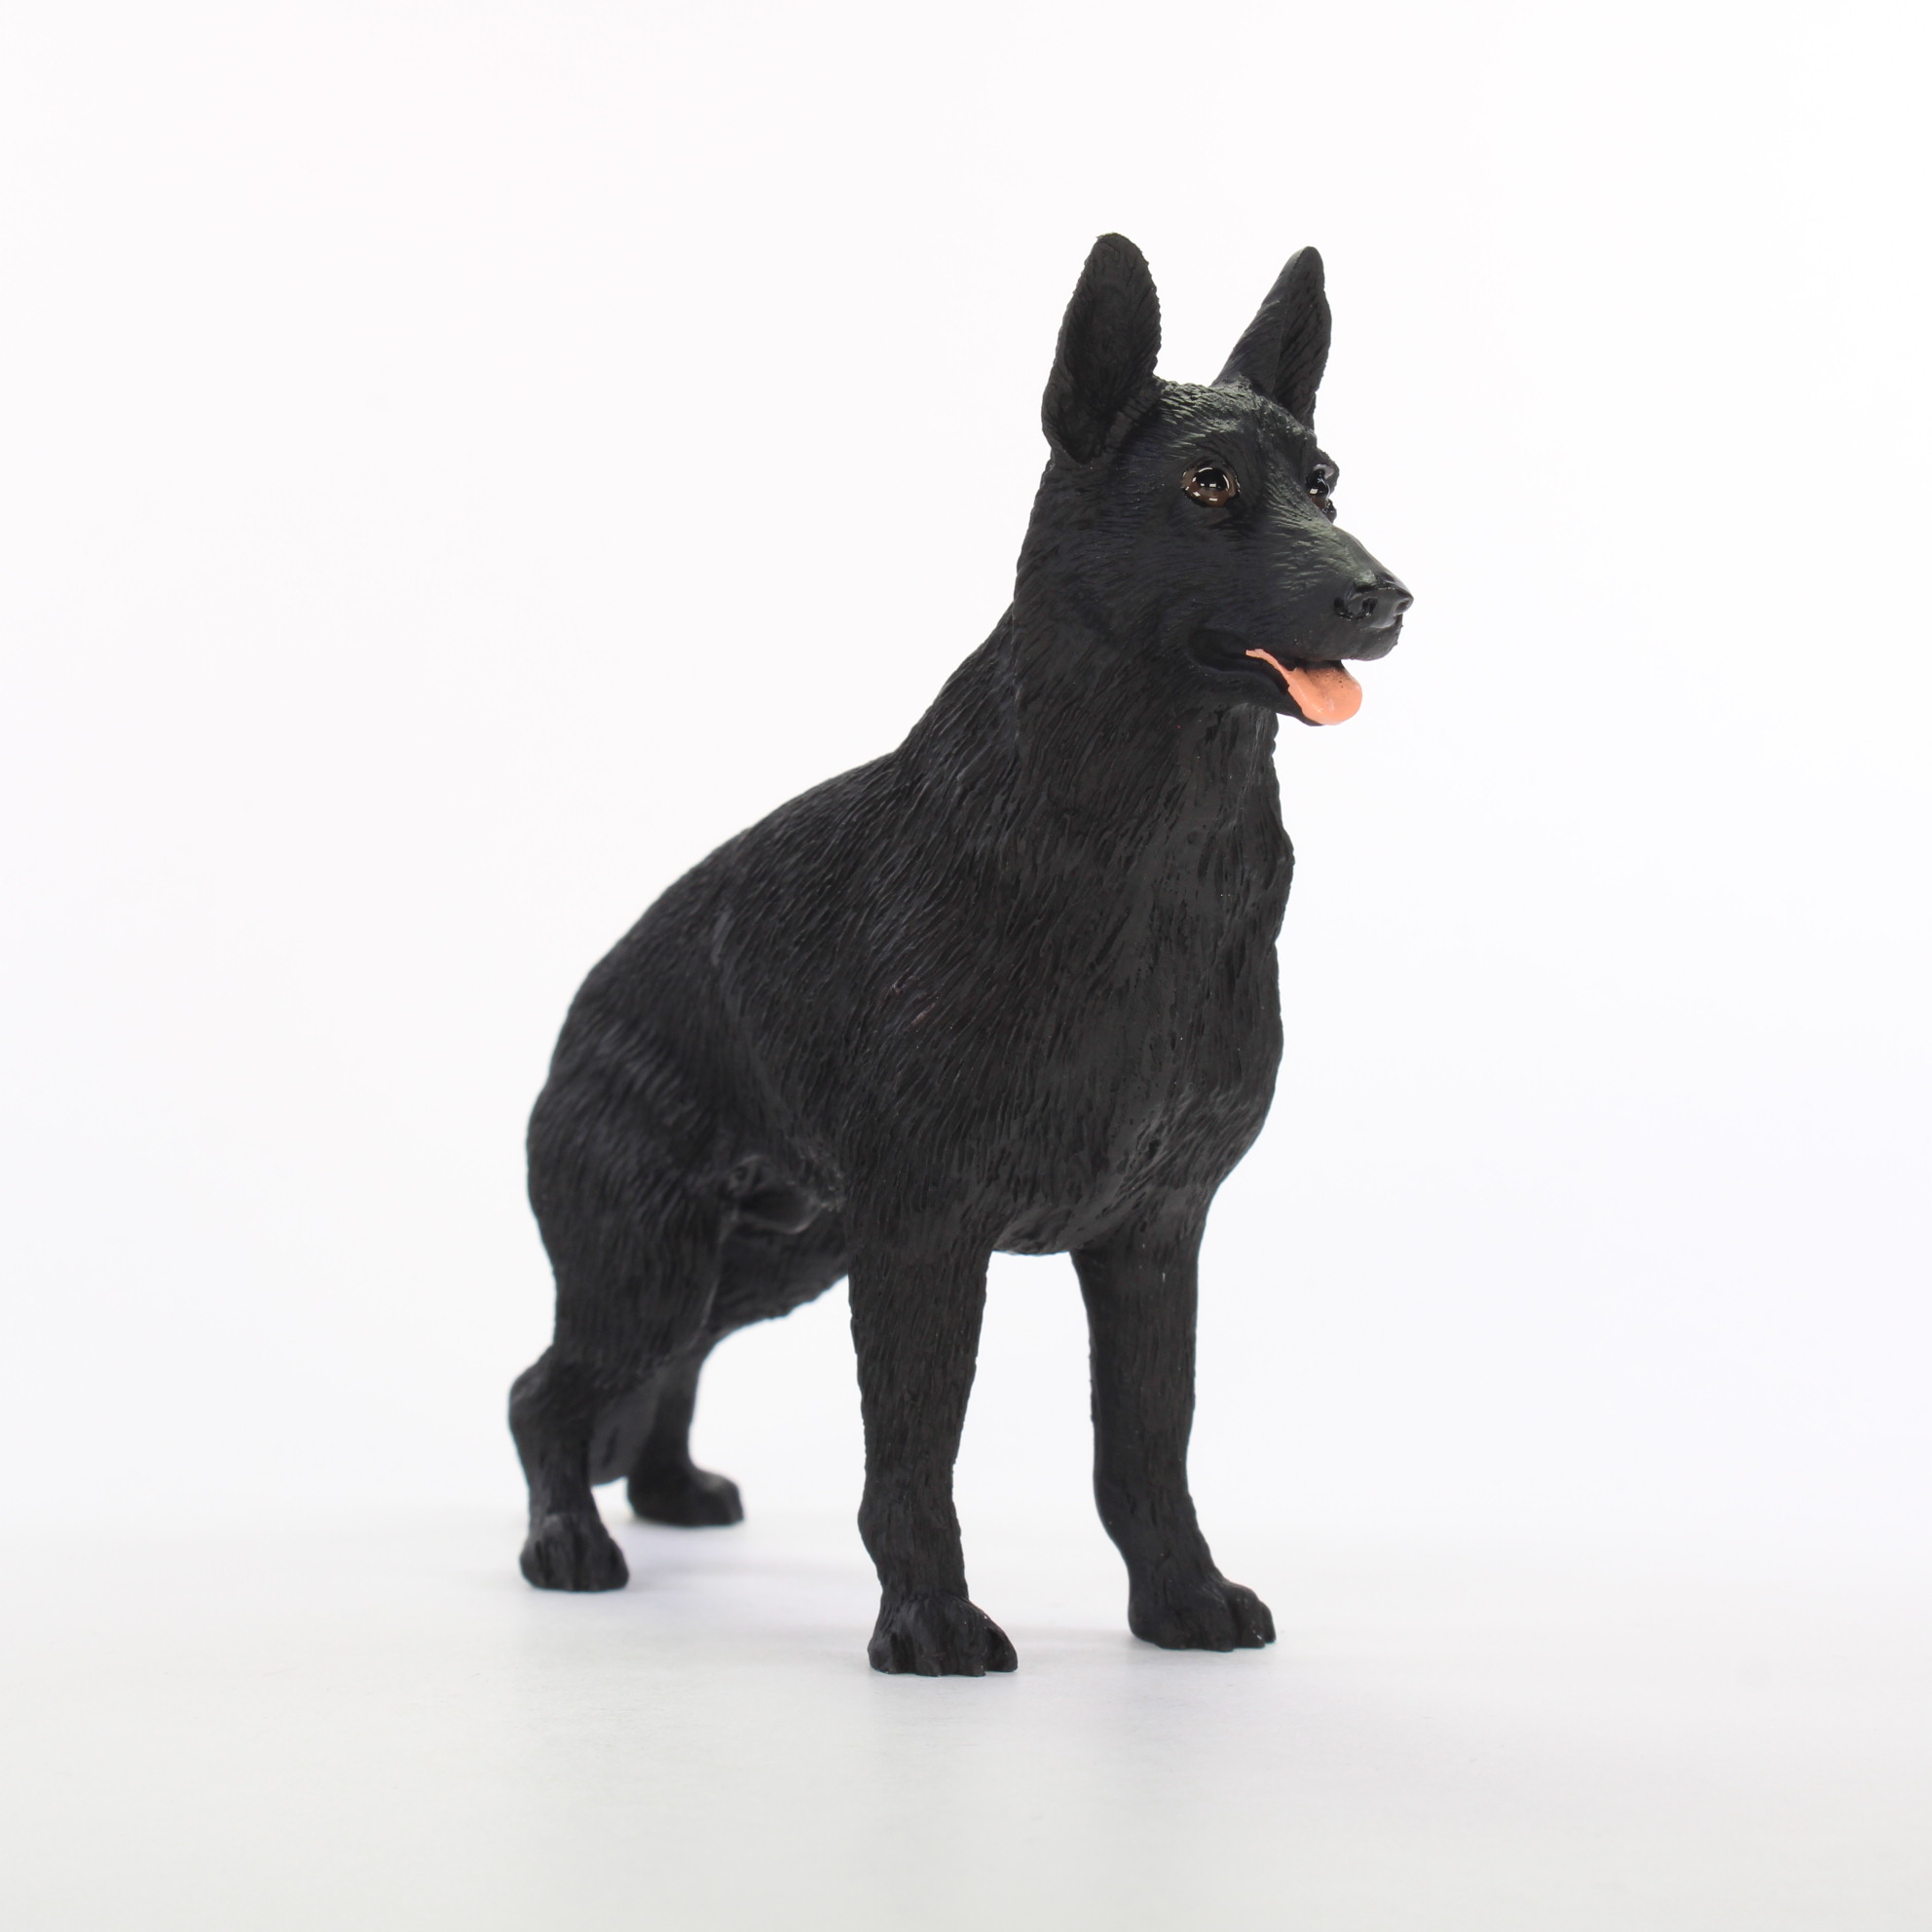 Pedigree Wine Bottle Holder German Shepherd Dog Figurine Home Decor 10"L New 